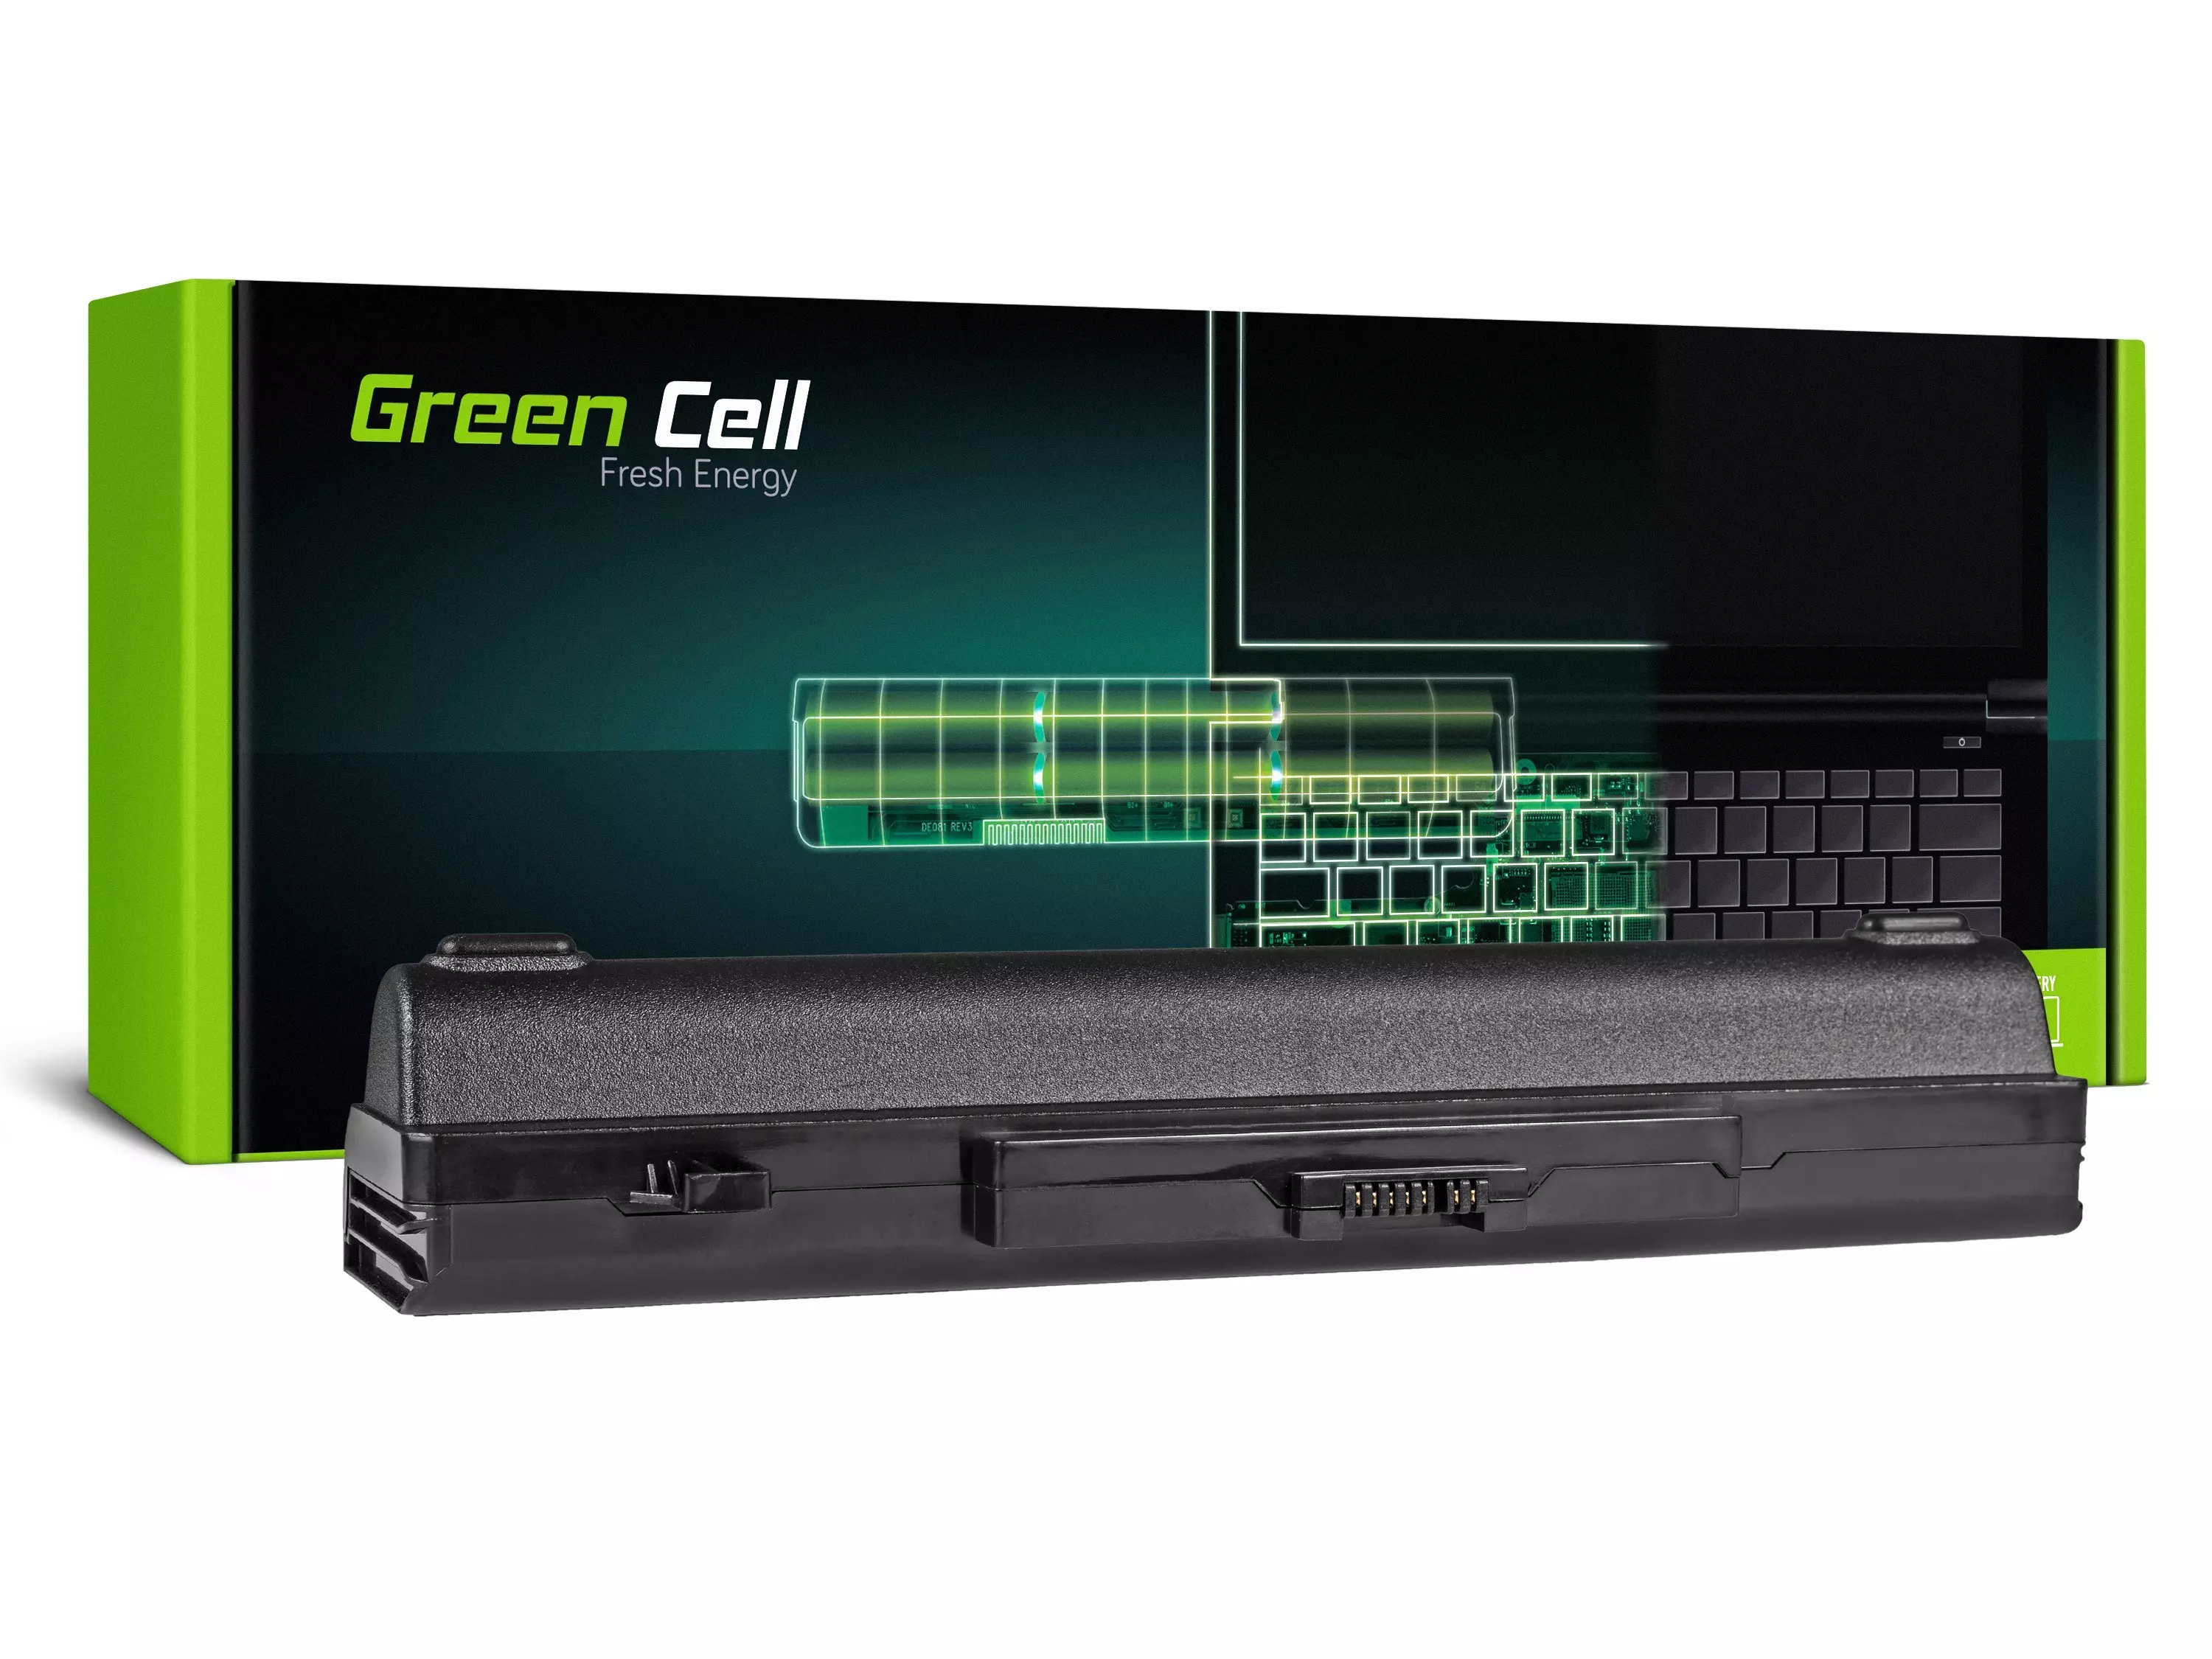 Baterie extinsă Green Cell pentru laptop IBM Lenovo G500 G505 G510 G580 G585 G700 IdeaPad Z580 P580